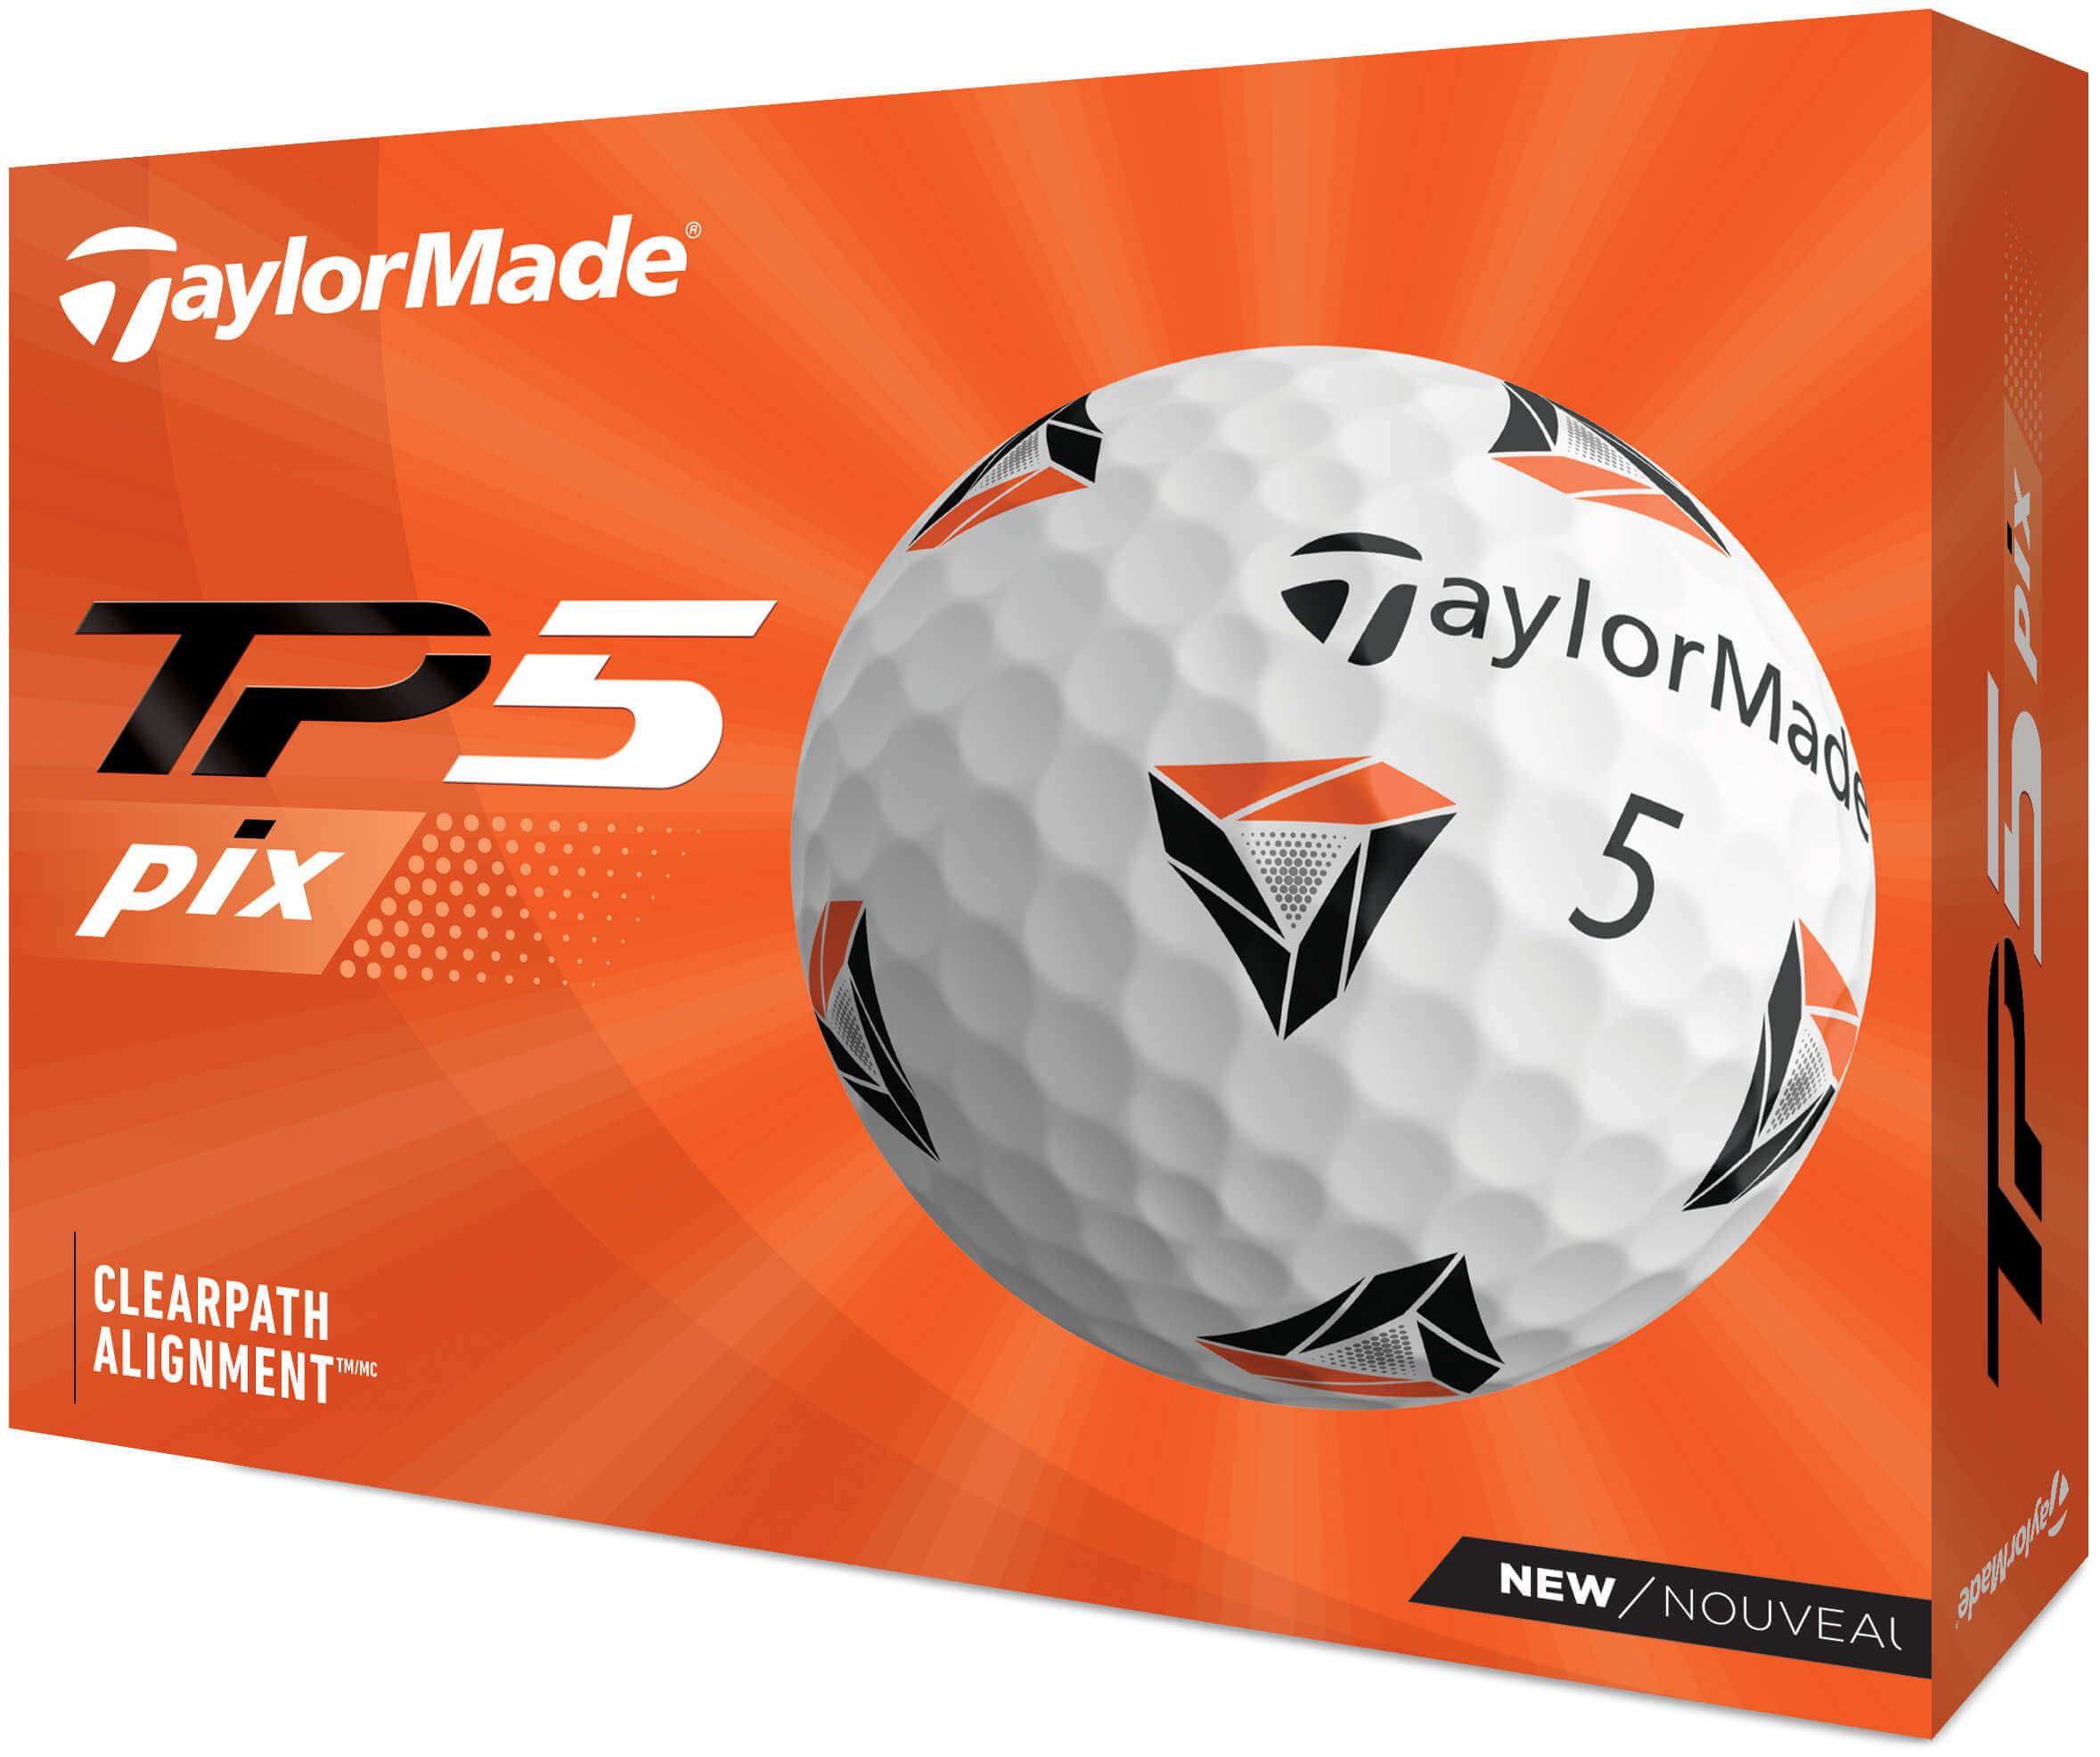 TaylorMade TP5 pix Golfbälle, white